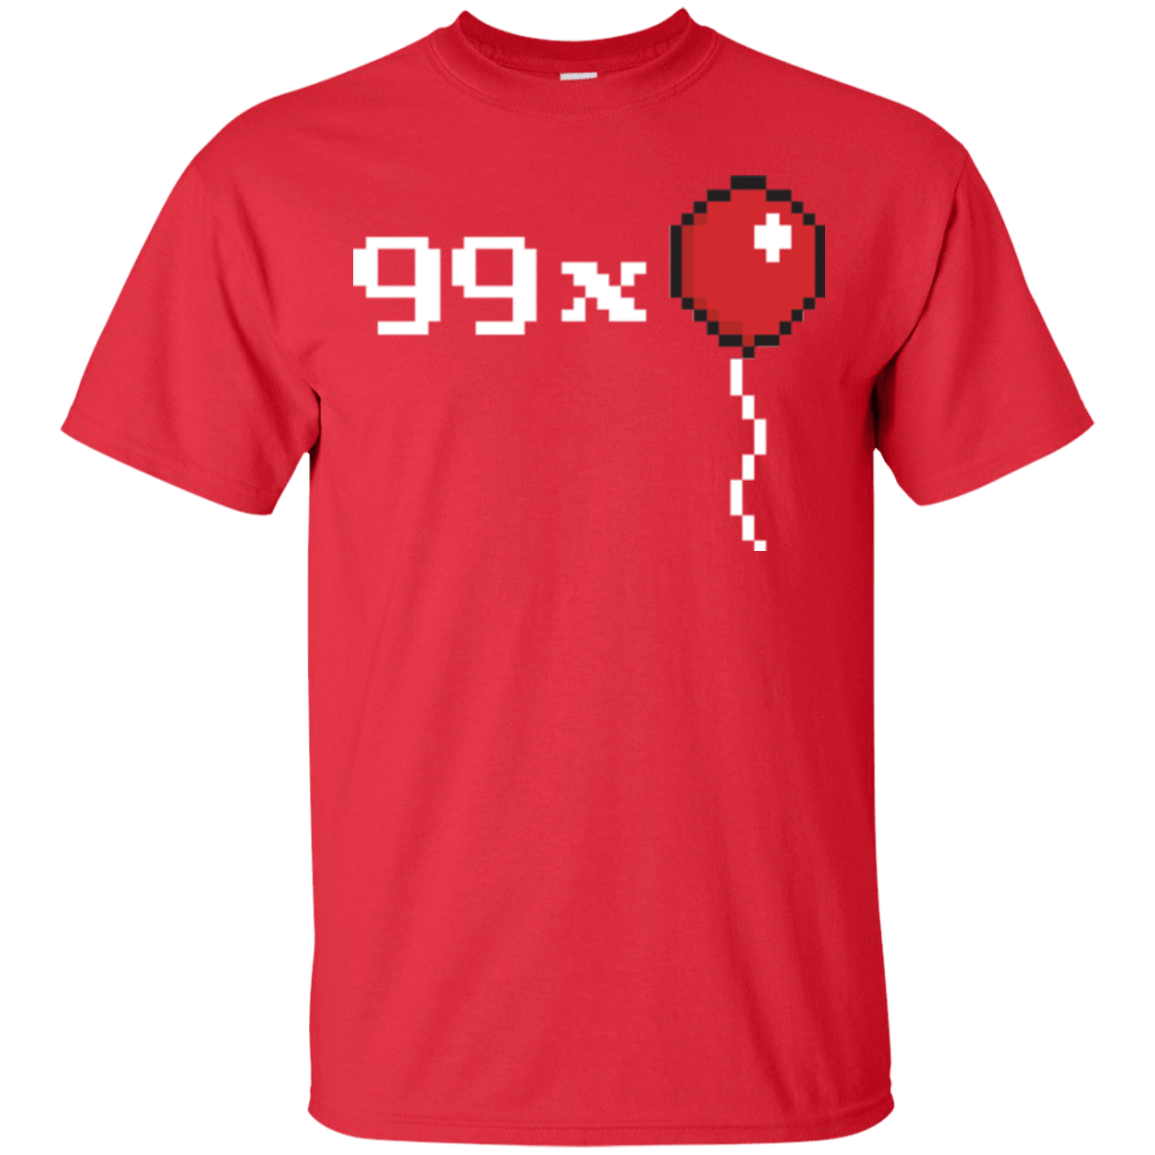 T-Shirts Red / Small 99x Balloon T-Shirt